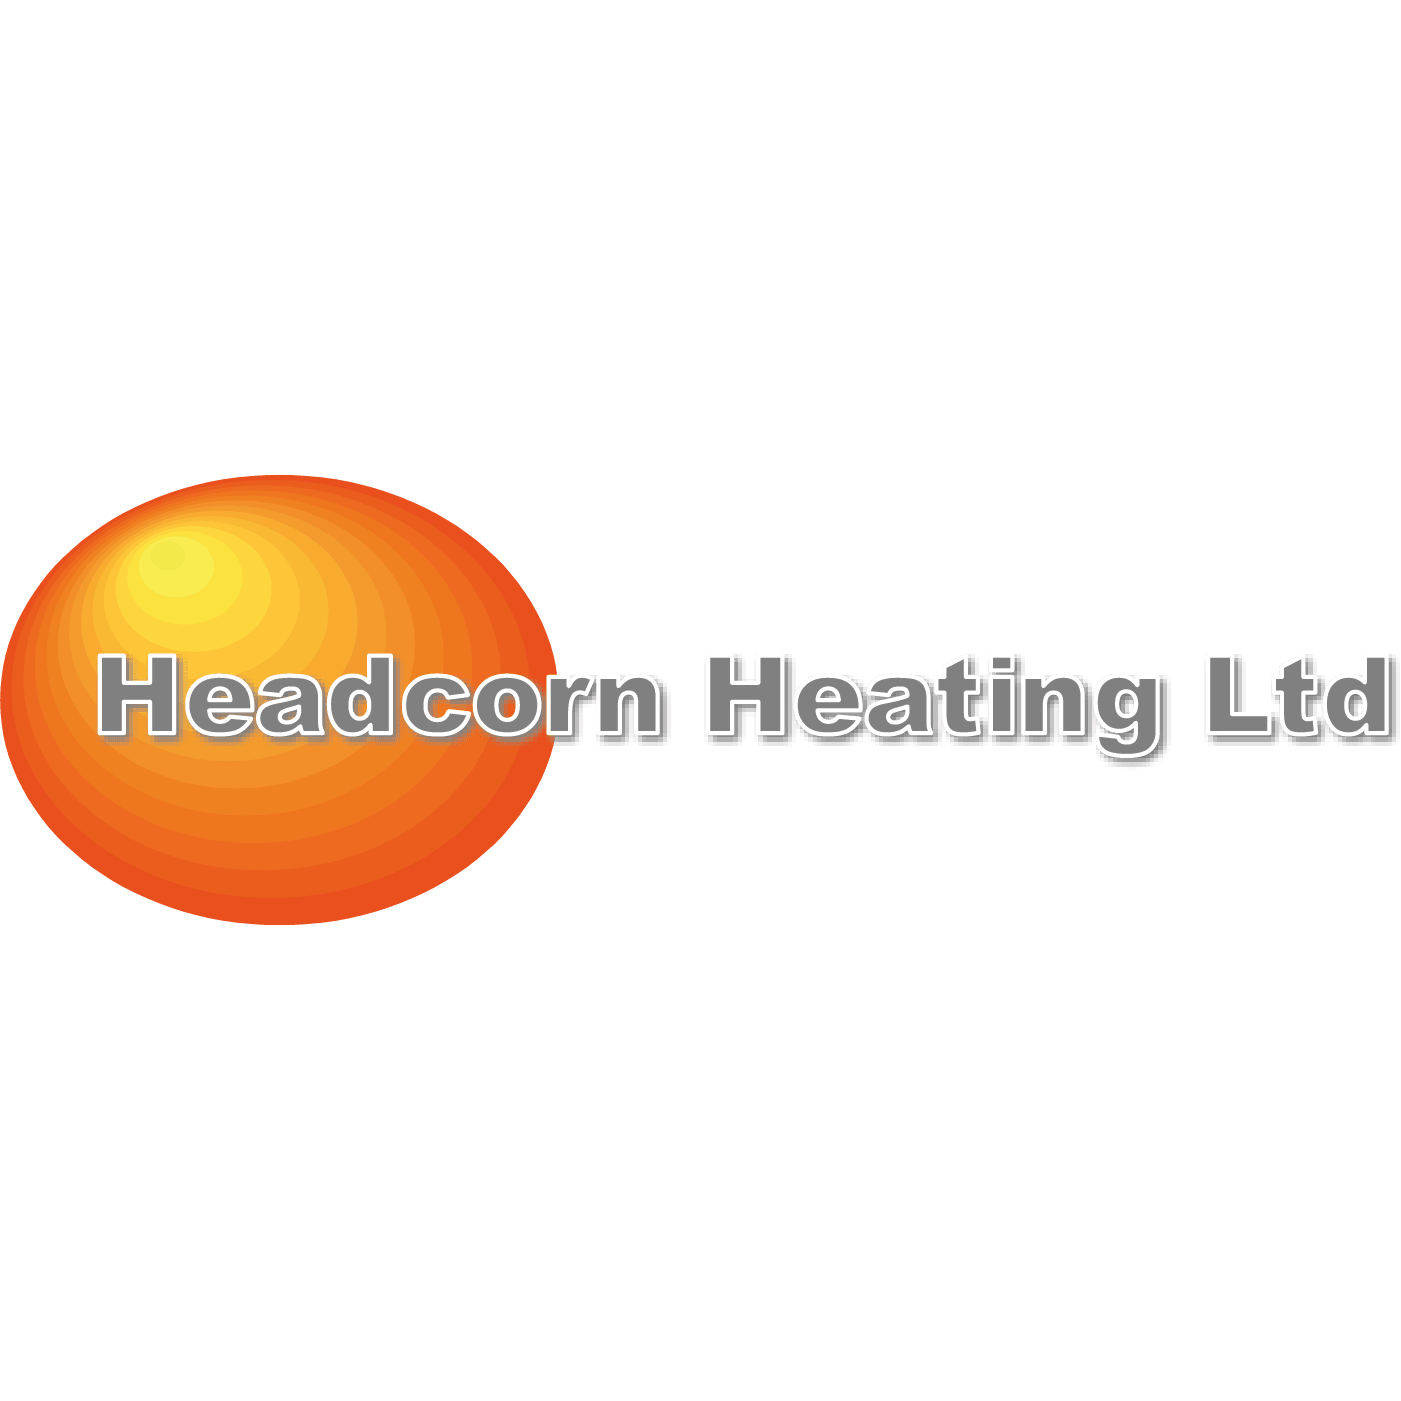 LOGO Headcorn Heating Ltd Ashford 01622 891299